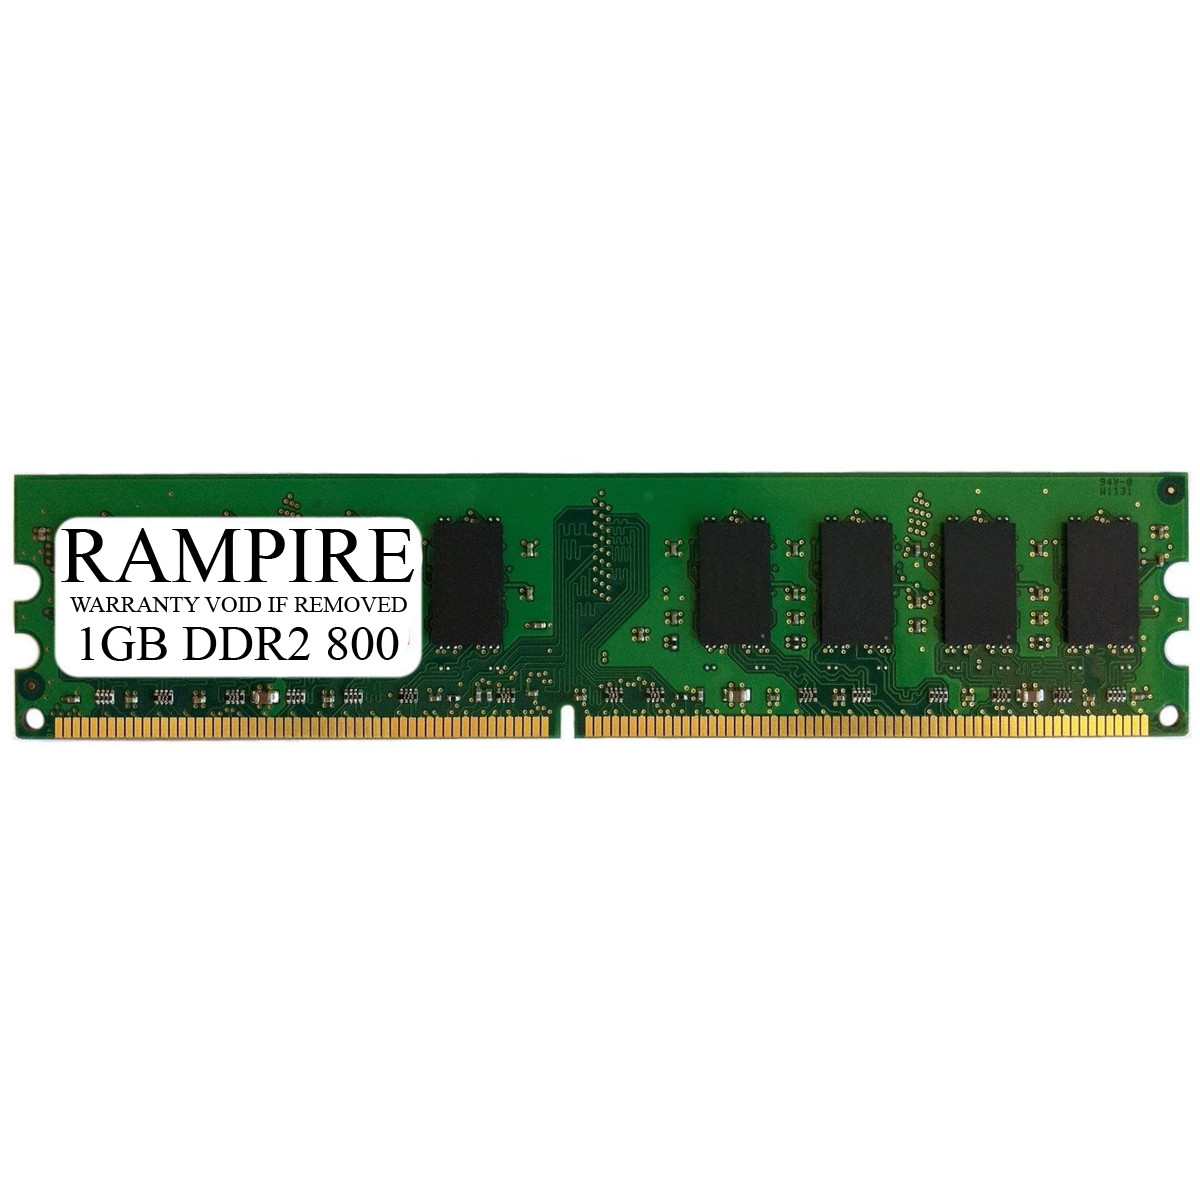 RAMPIRE 1GB DDR2 800 (PC2 6400) 240-Pin DDR2 SDRAM 1.8V 2Rx8 Non-ECC UDIMM Memory for Desktop PC